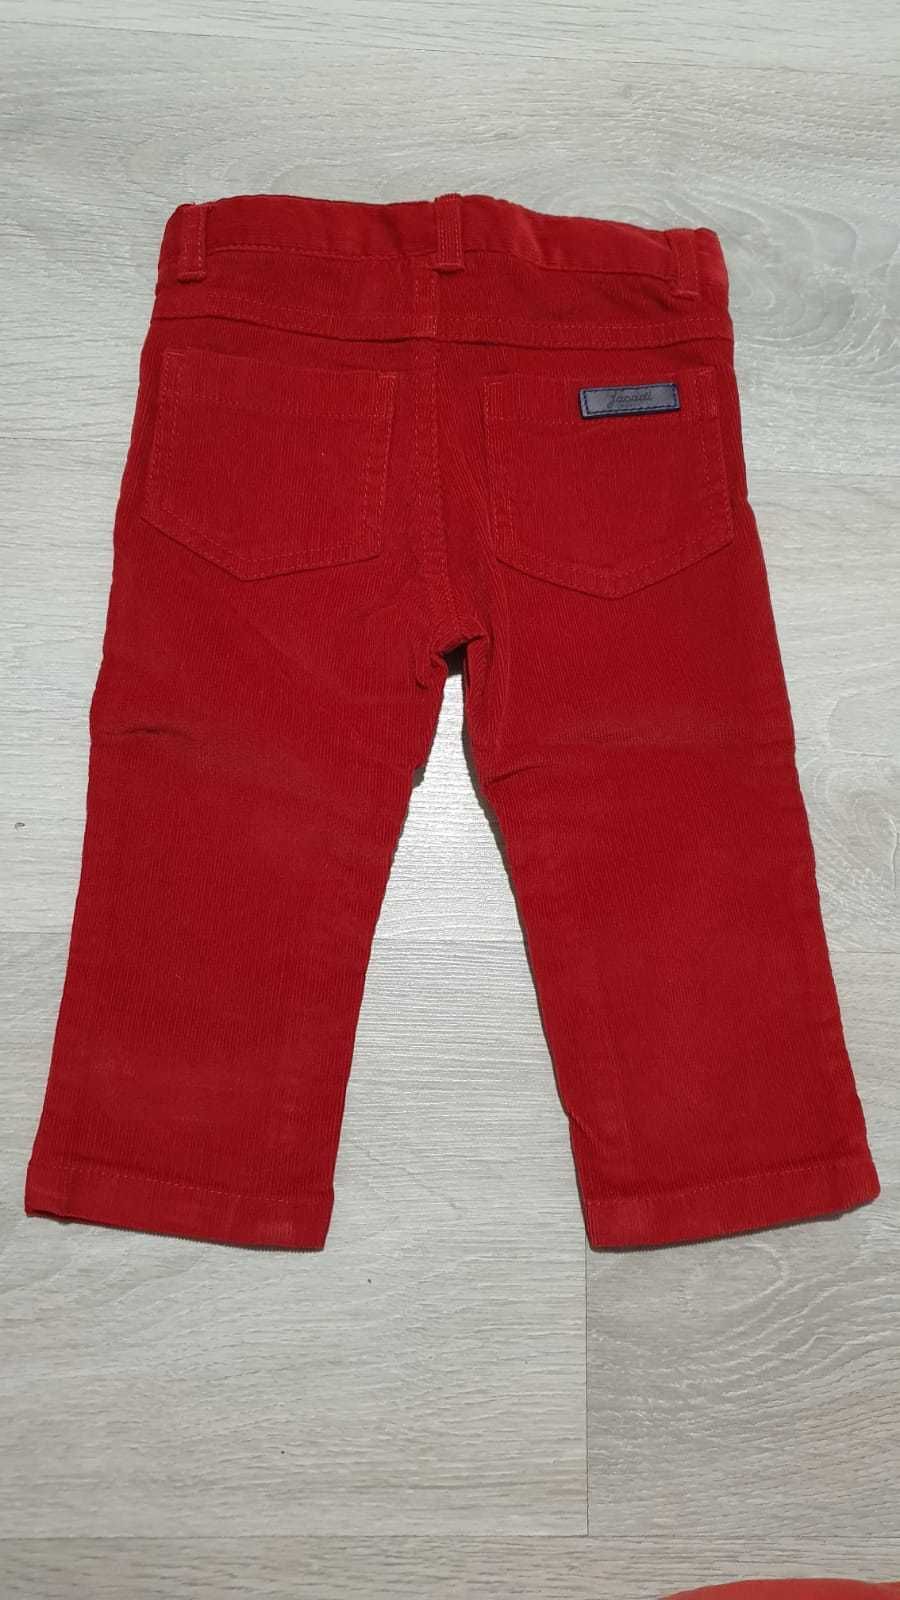 Pantaloni Jacadi - 12 luni - 74 cm (raiati)